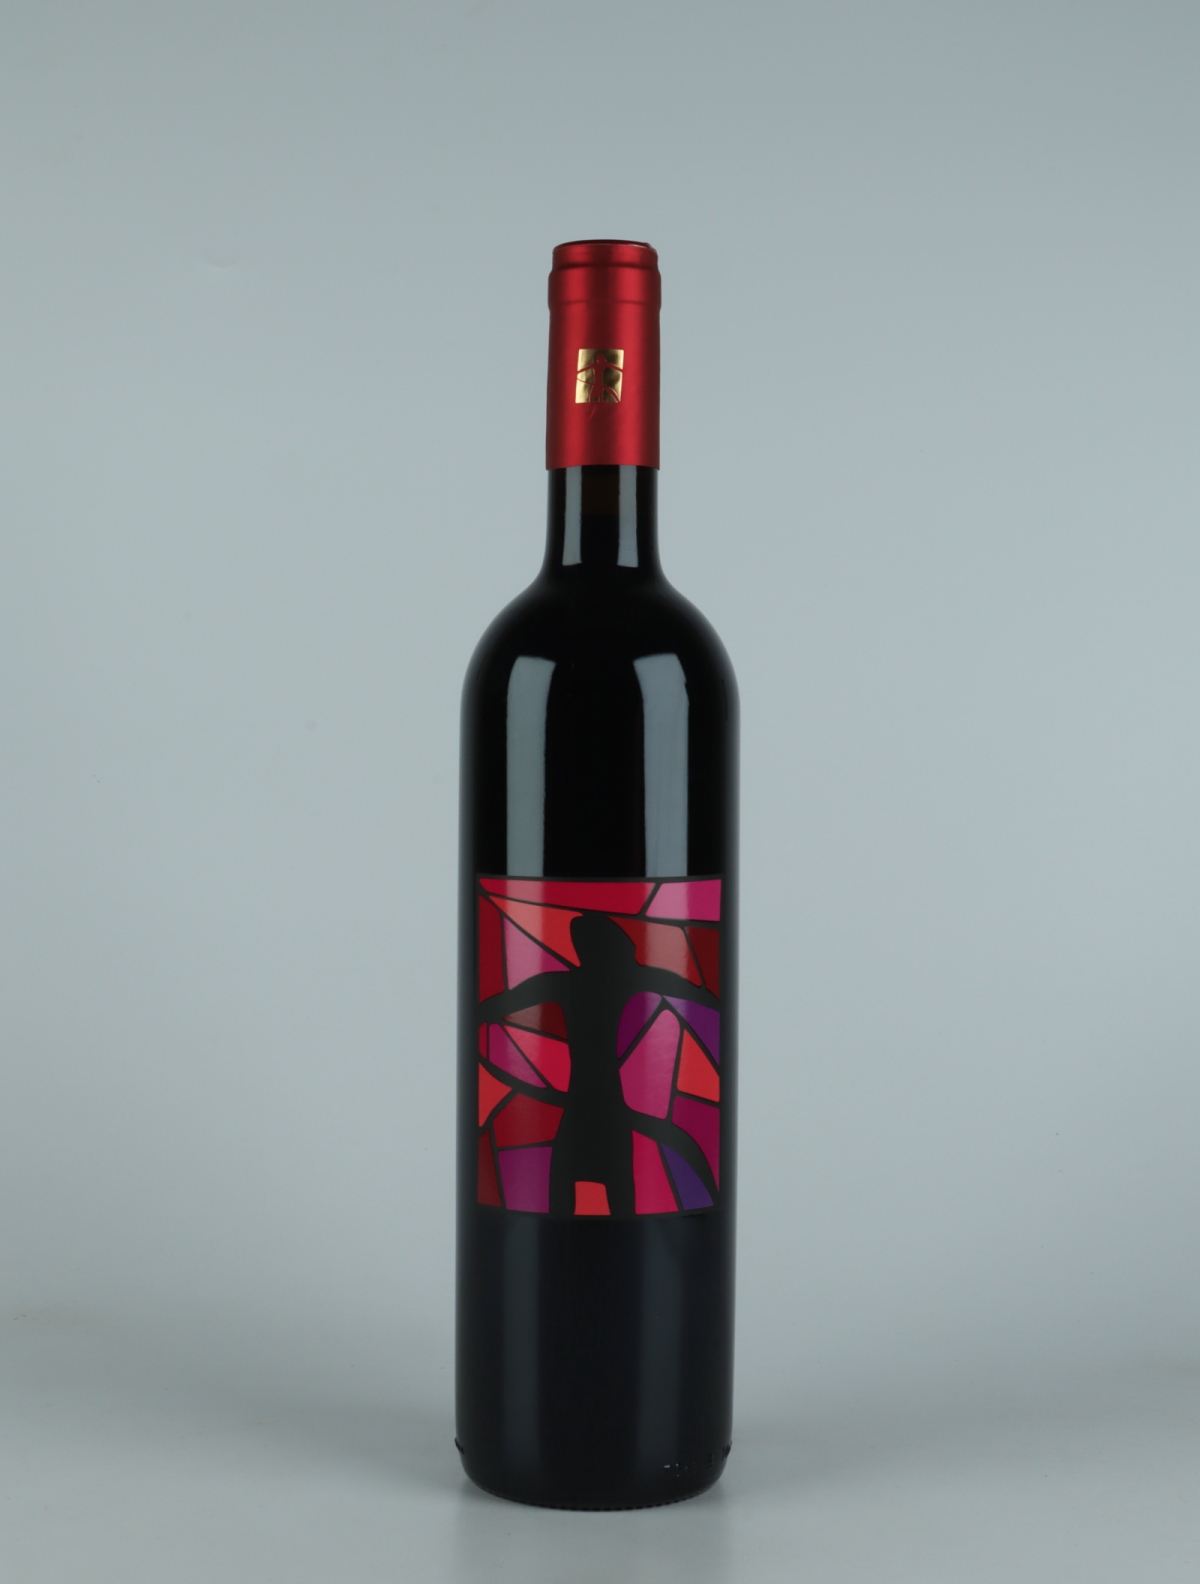 A bottle 2019 Gumbe di Amirai Red wine from Tenuta Selvadolce, Liguria in Italy